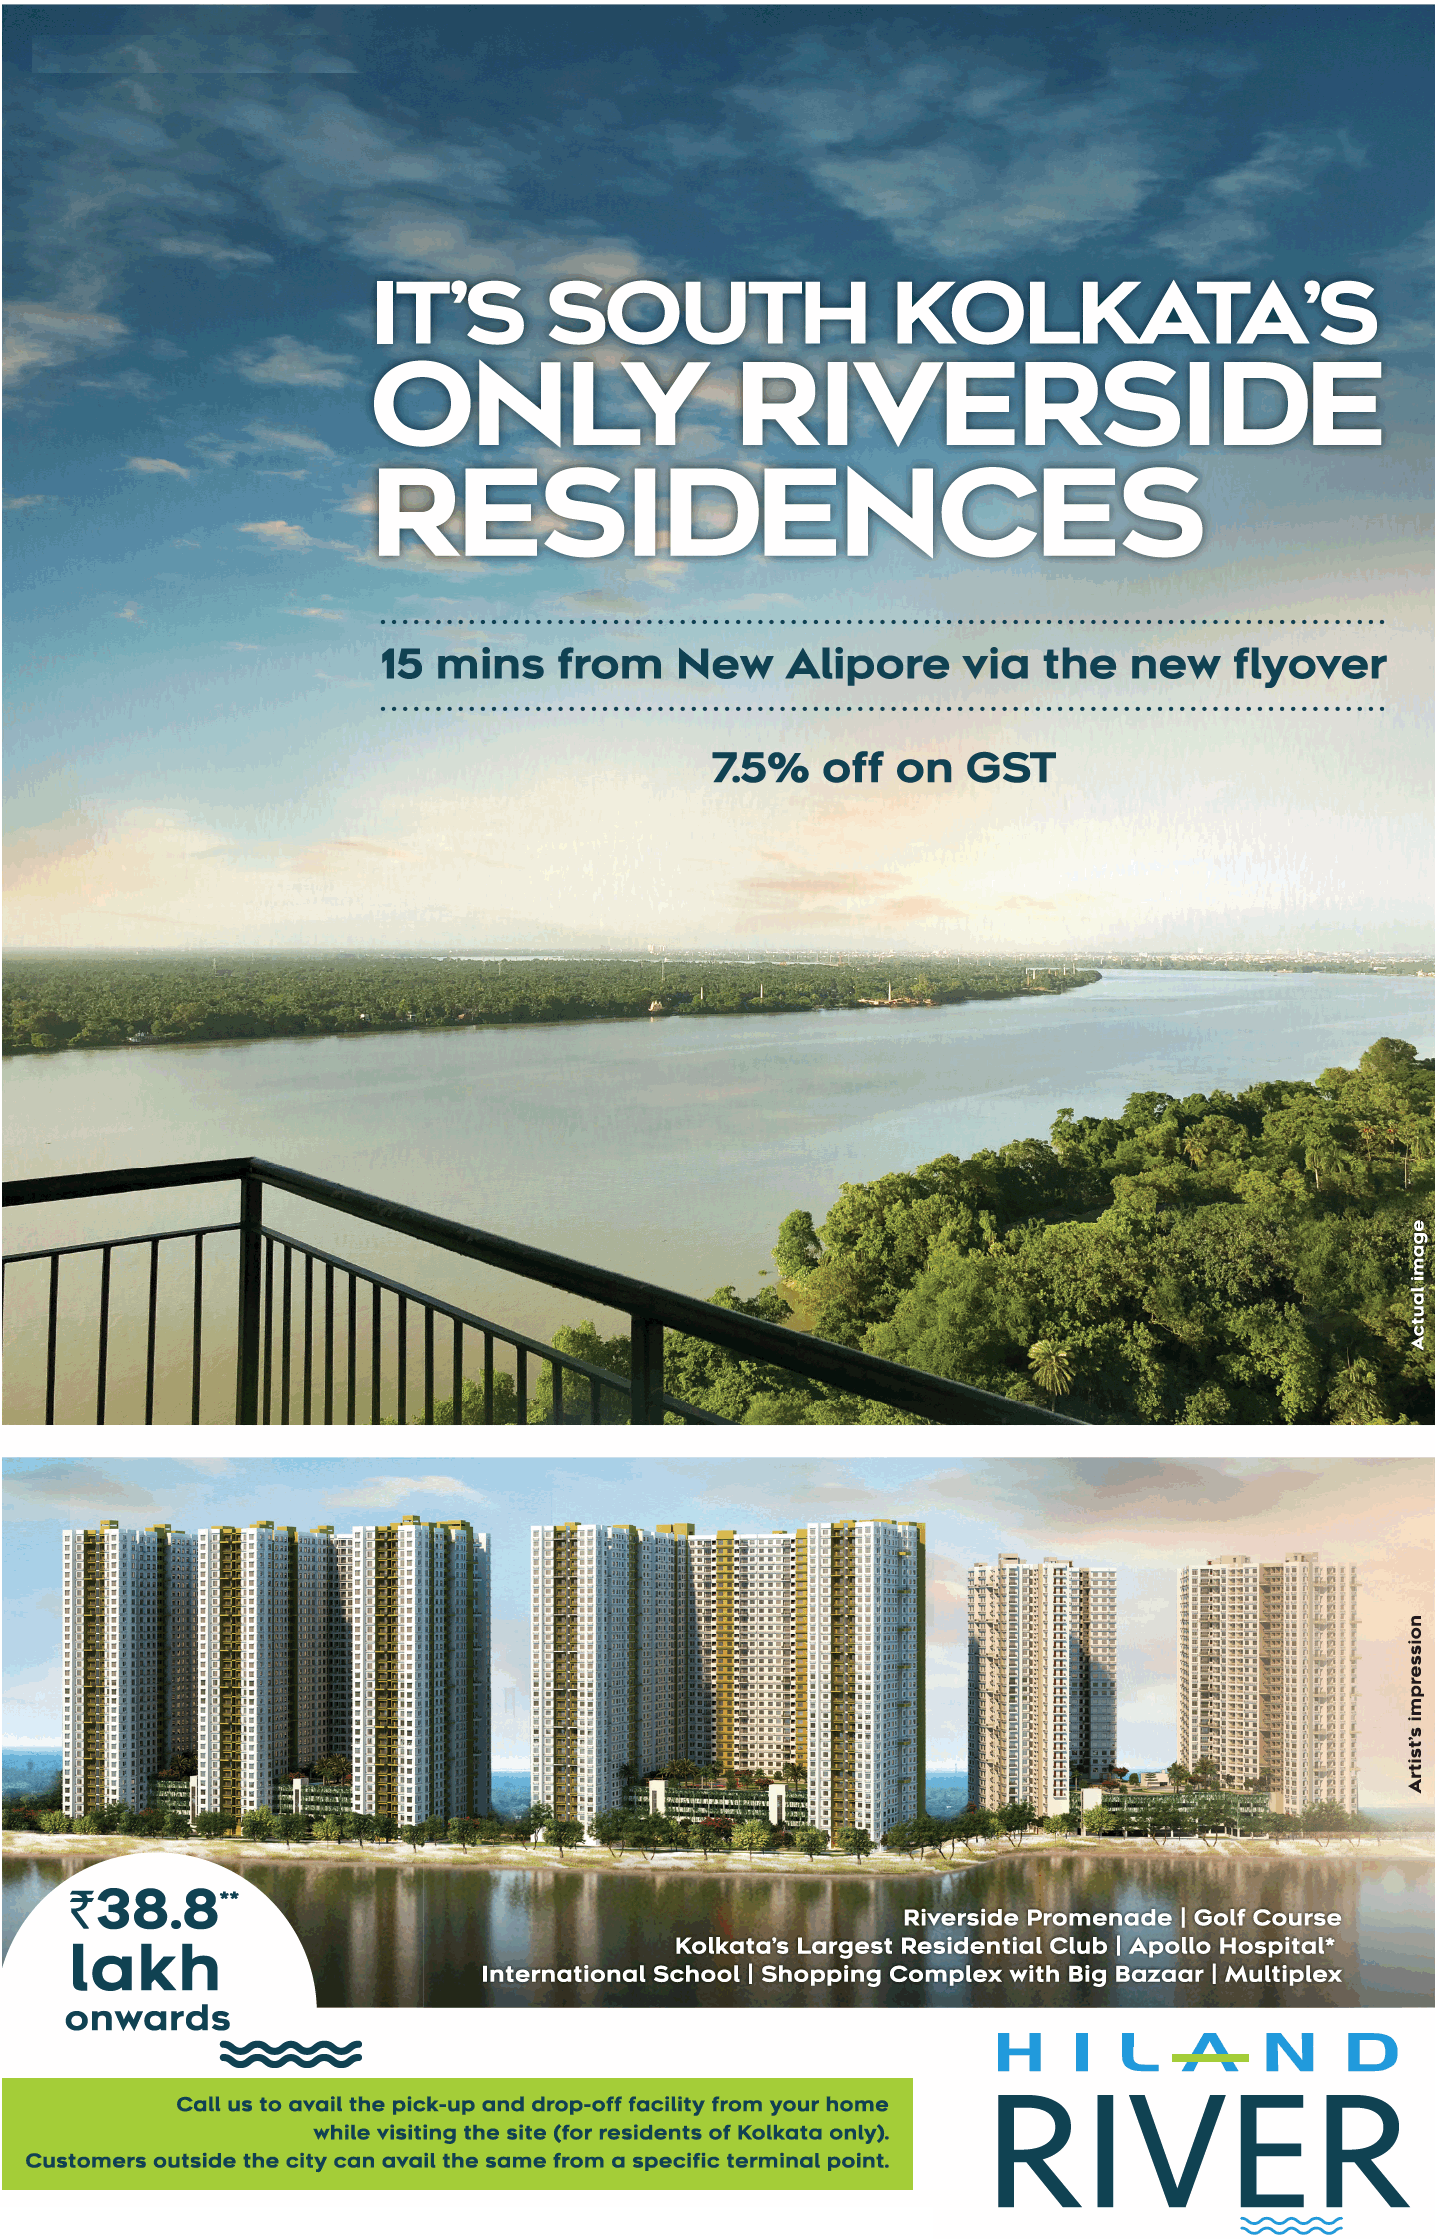 Hiland River launching riverside residences in Kolkata Update